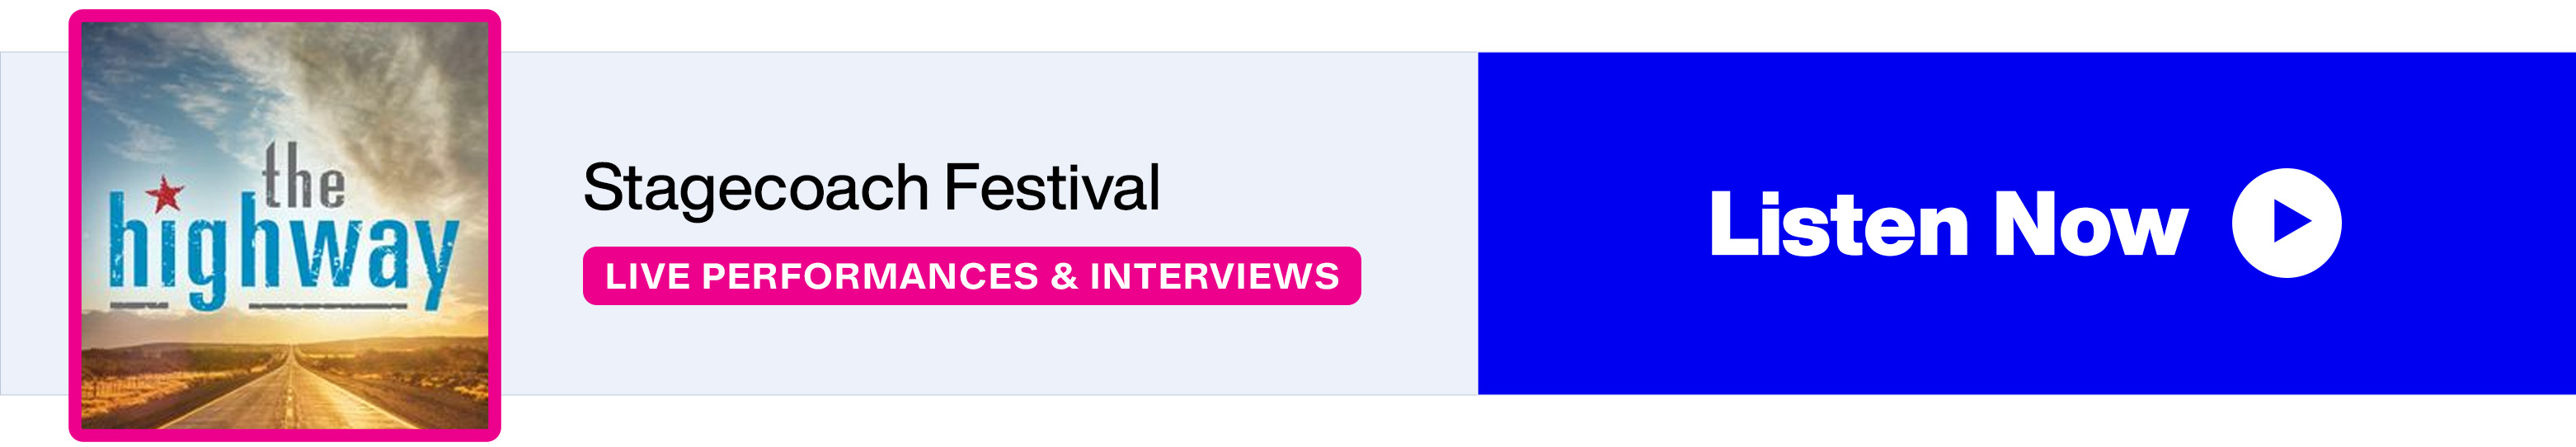 SiriusXM The Highway - Stagecoach Festival - Live Performances & Interviews - Listen Now banner